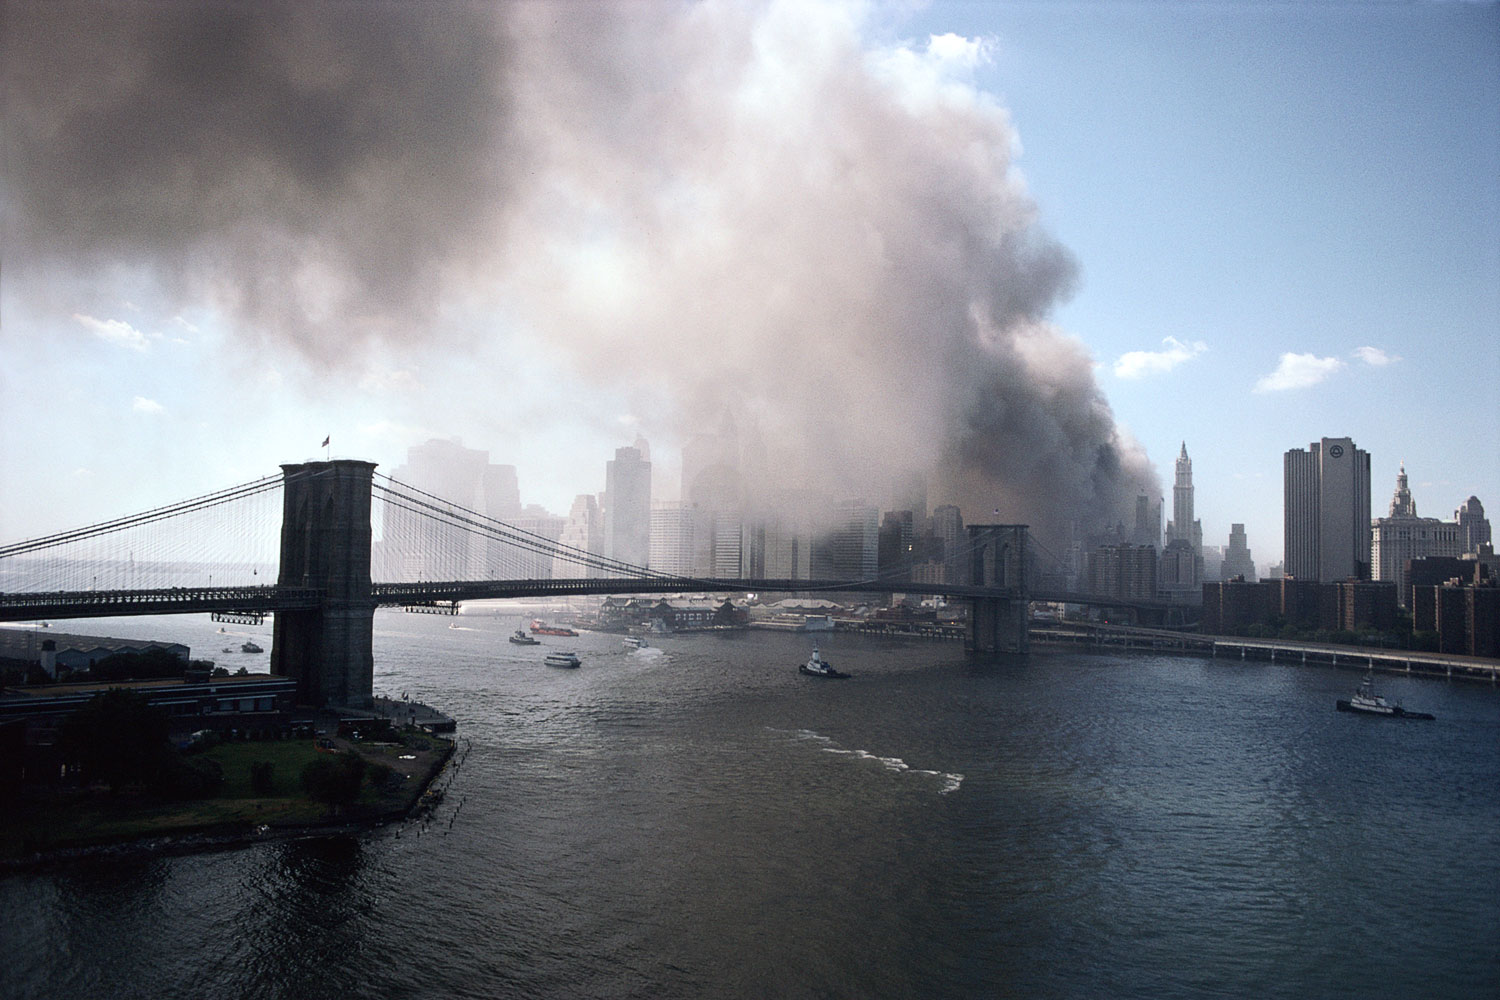 View of Lower Manhattan from the Manhattan Bridge, Brooklyn, September 11, 2001.